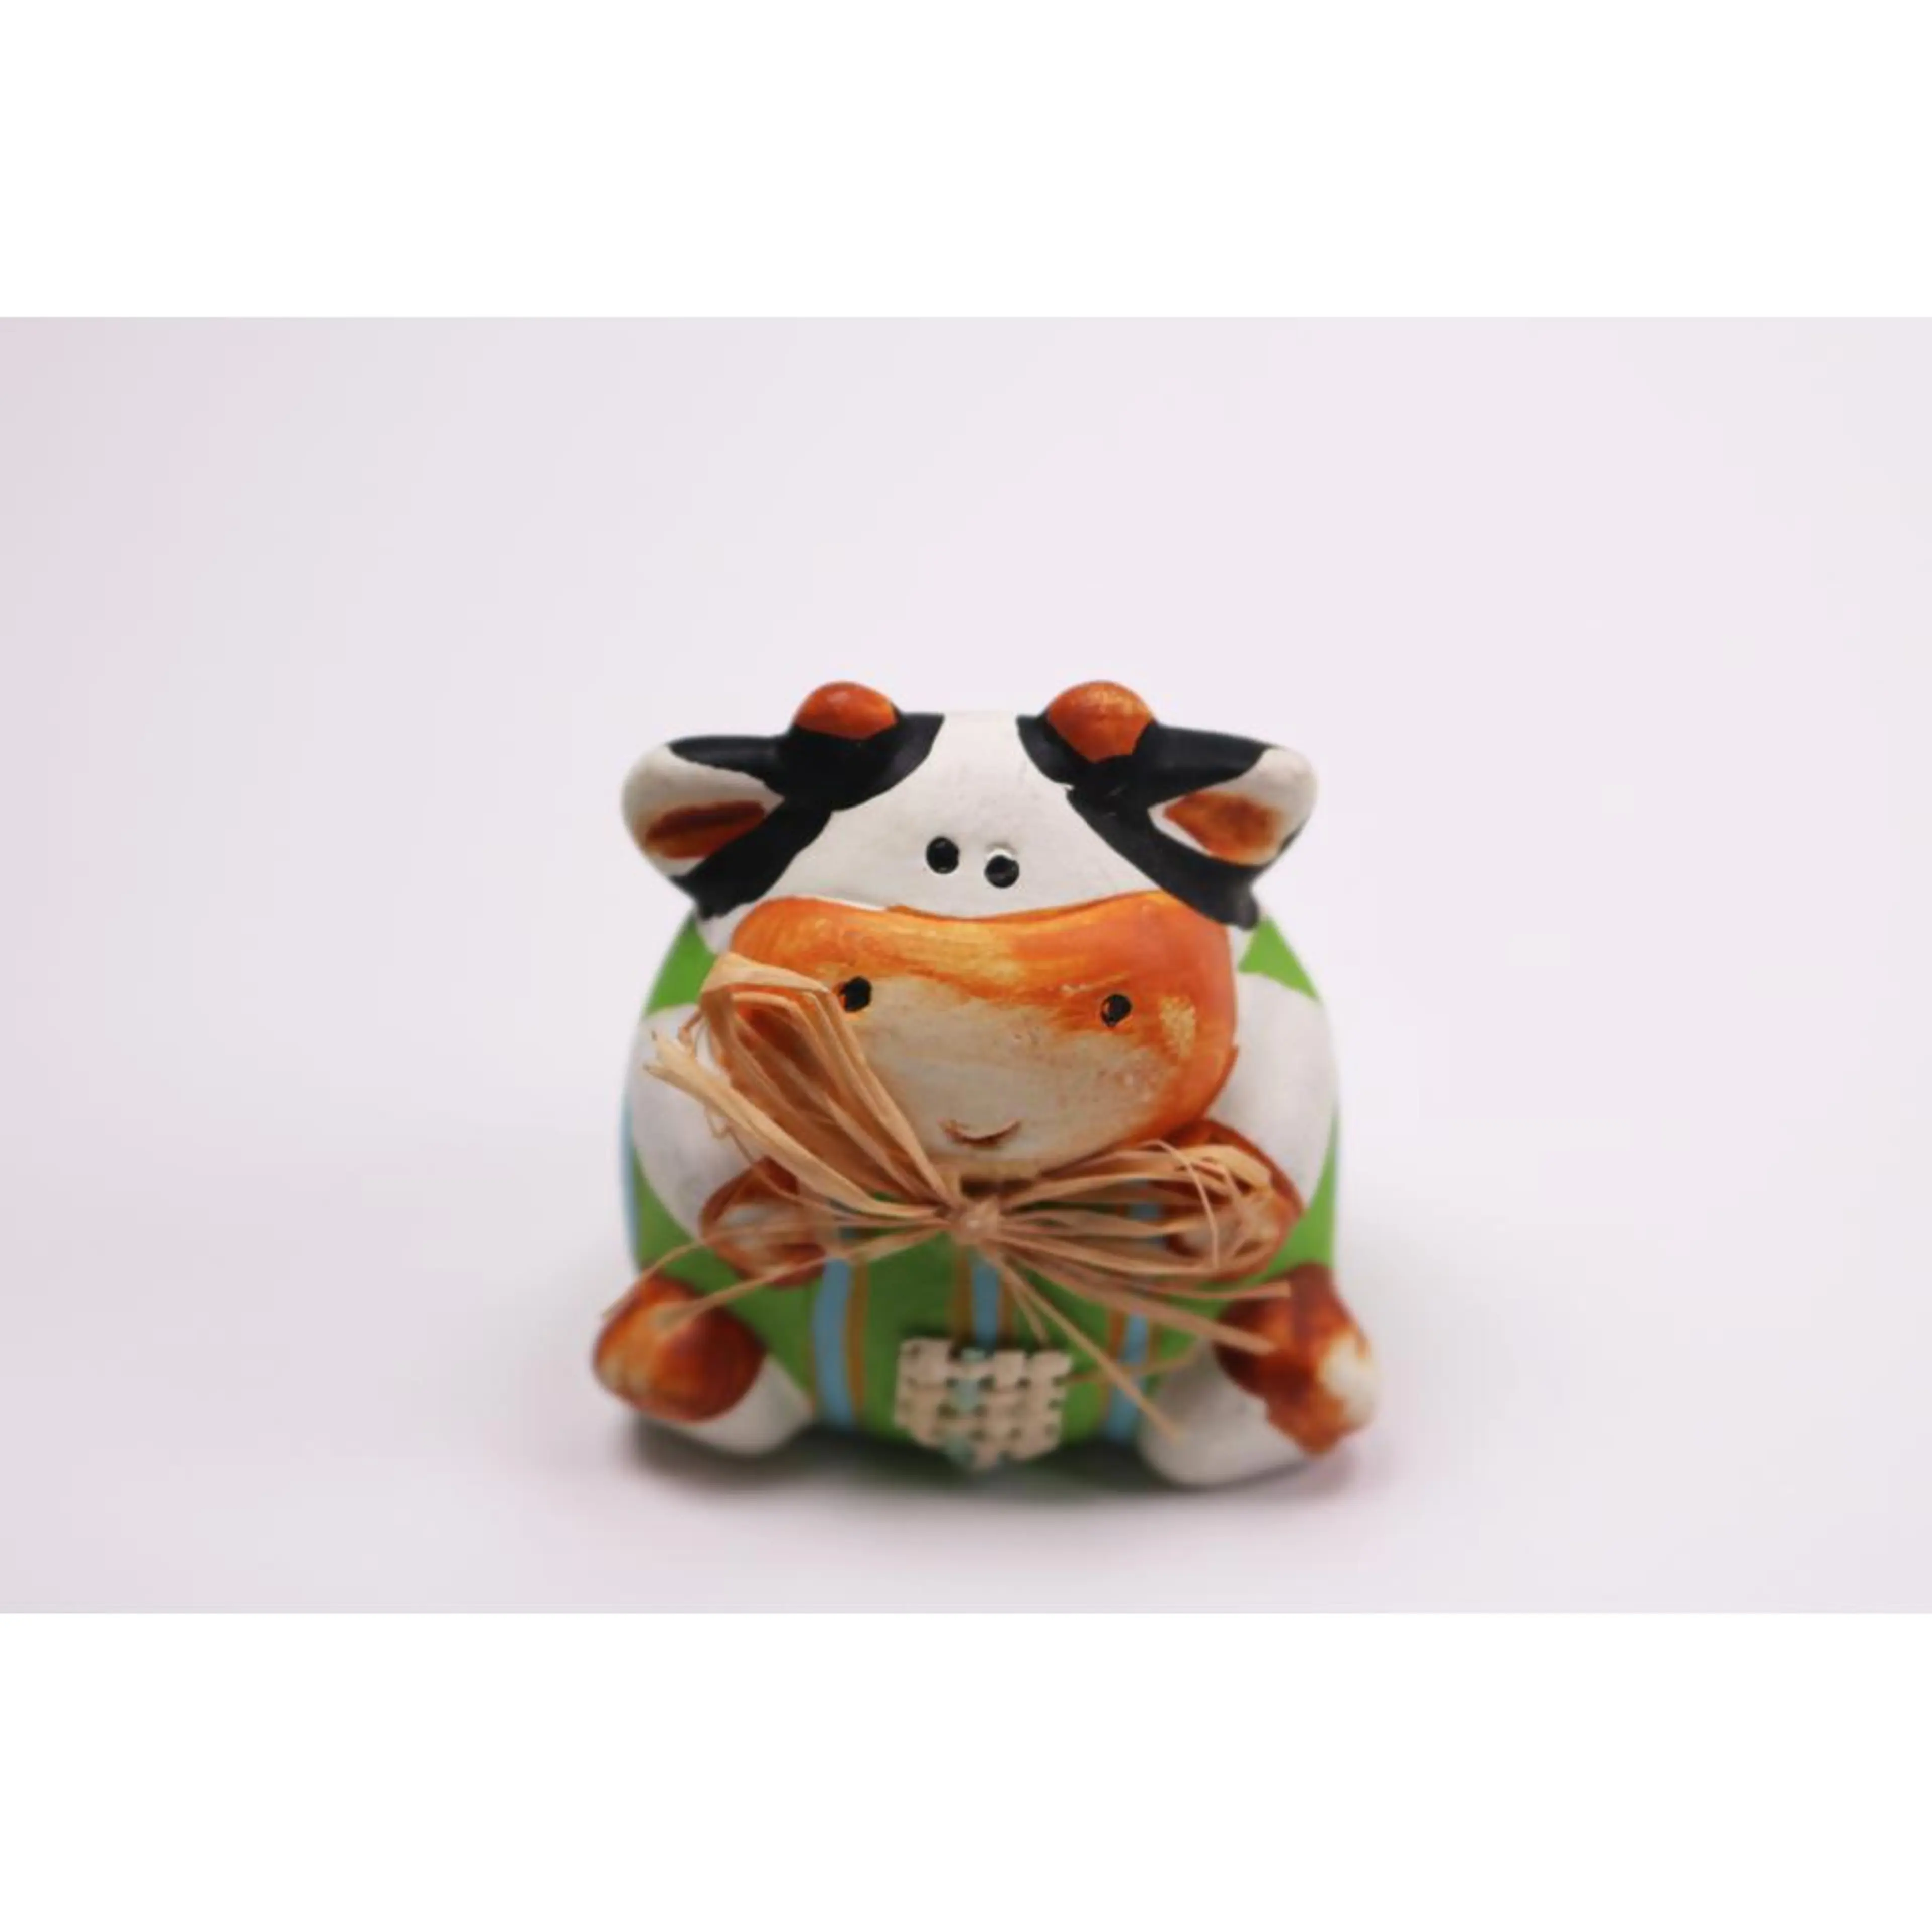 Handmade Ceramic Figurine Cow